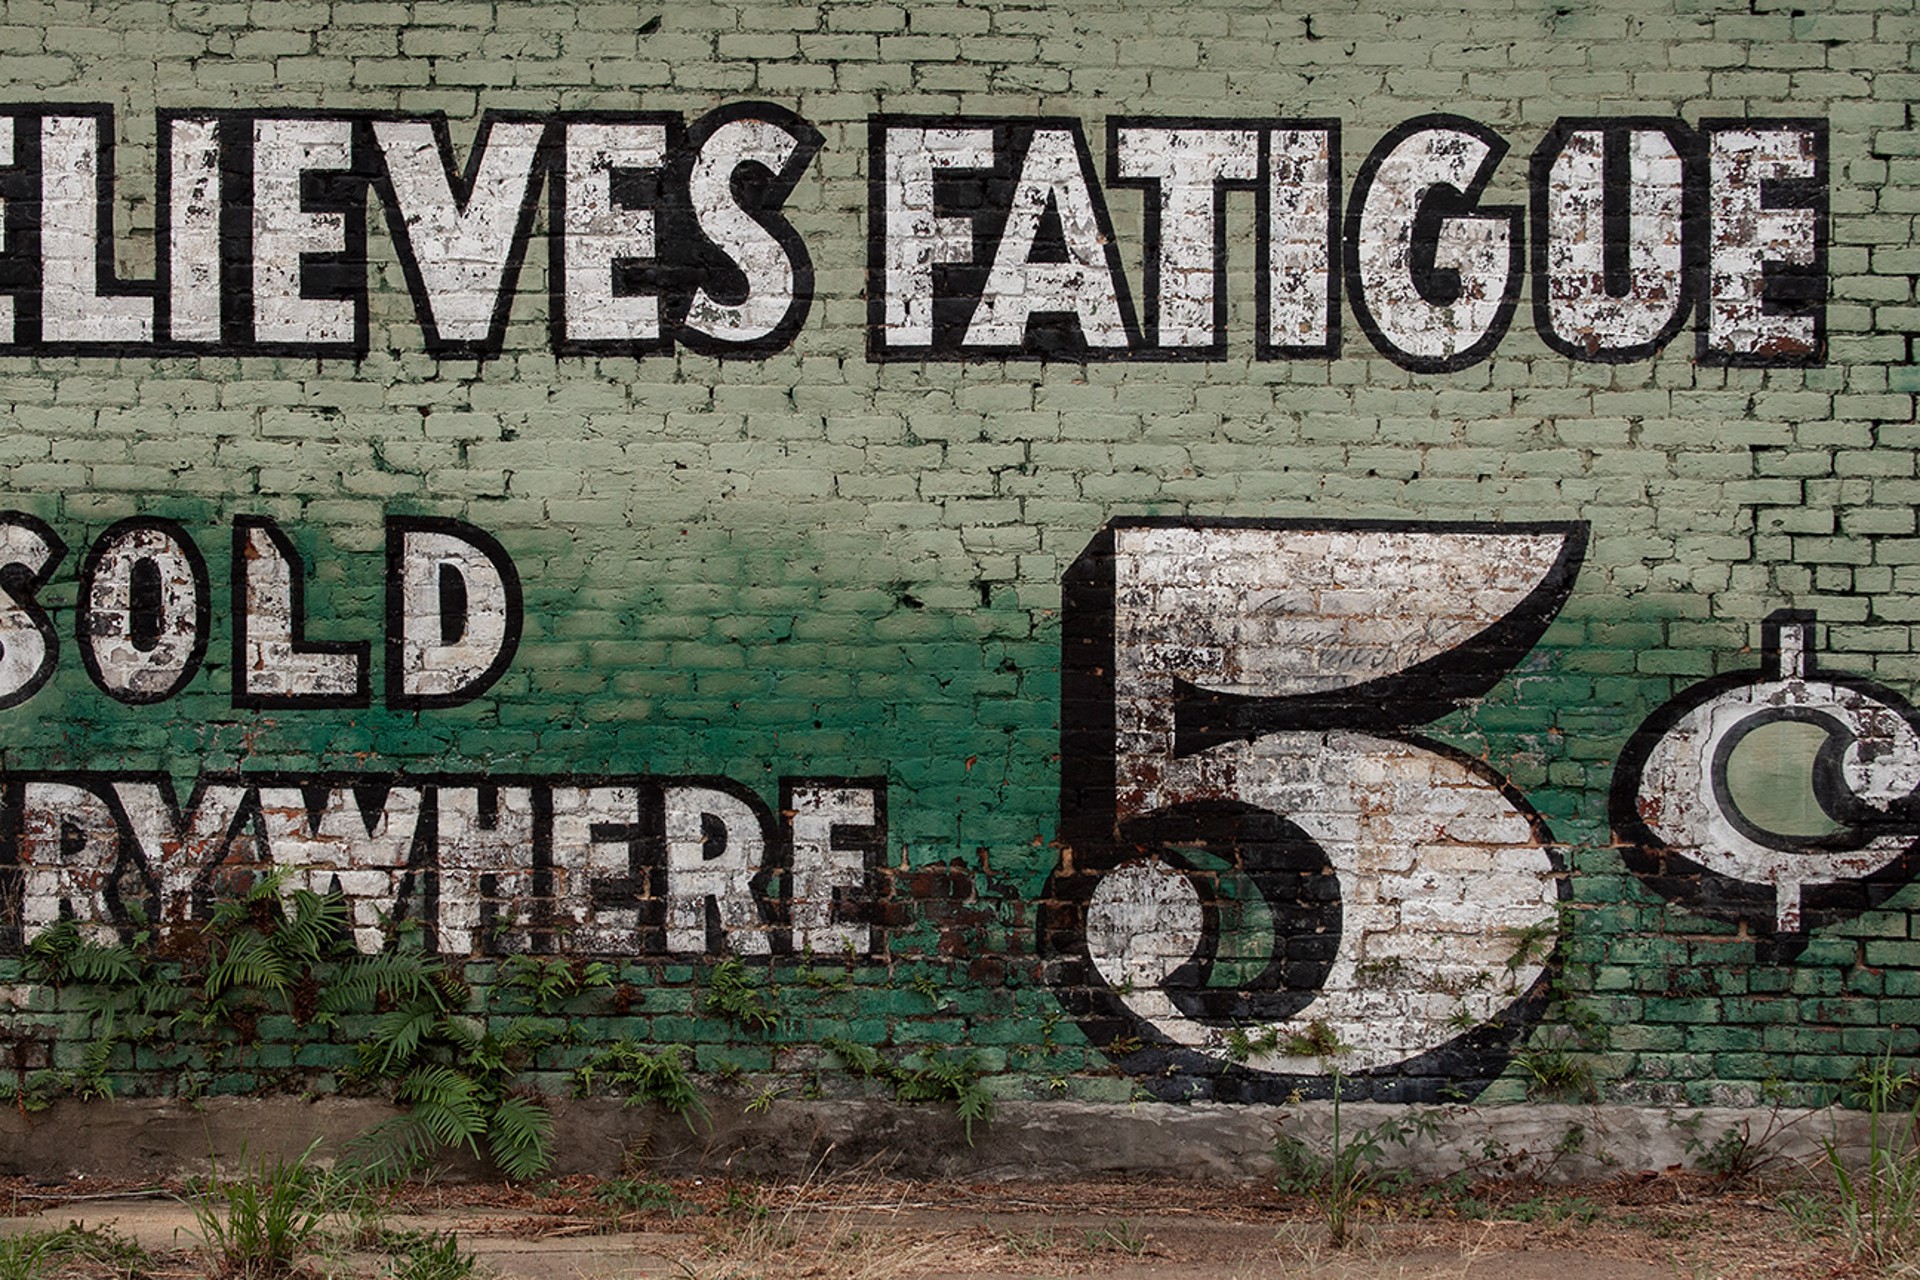 Relieves Fatigue, 5¢ Selma, AL 2005 by Jerry Siegel